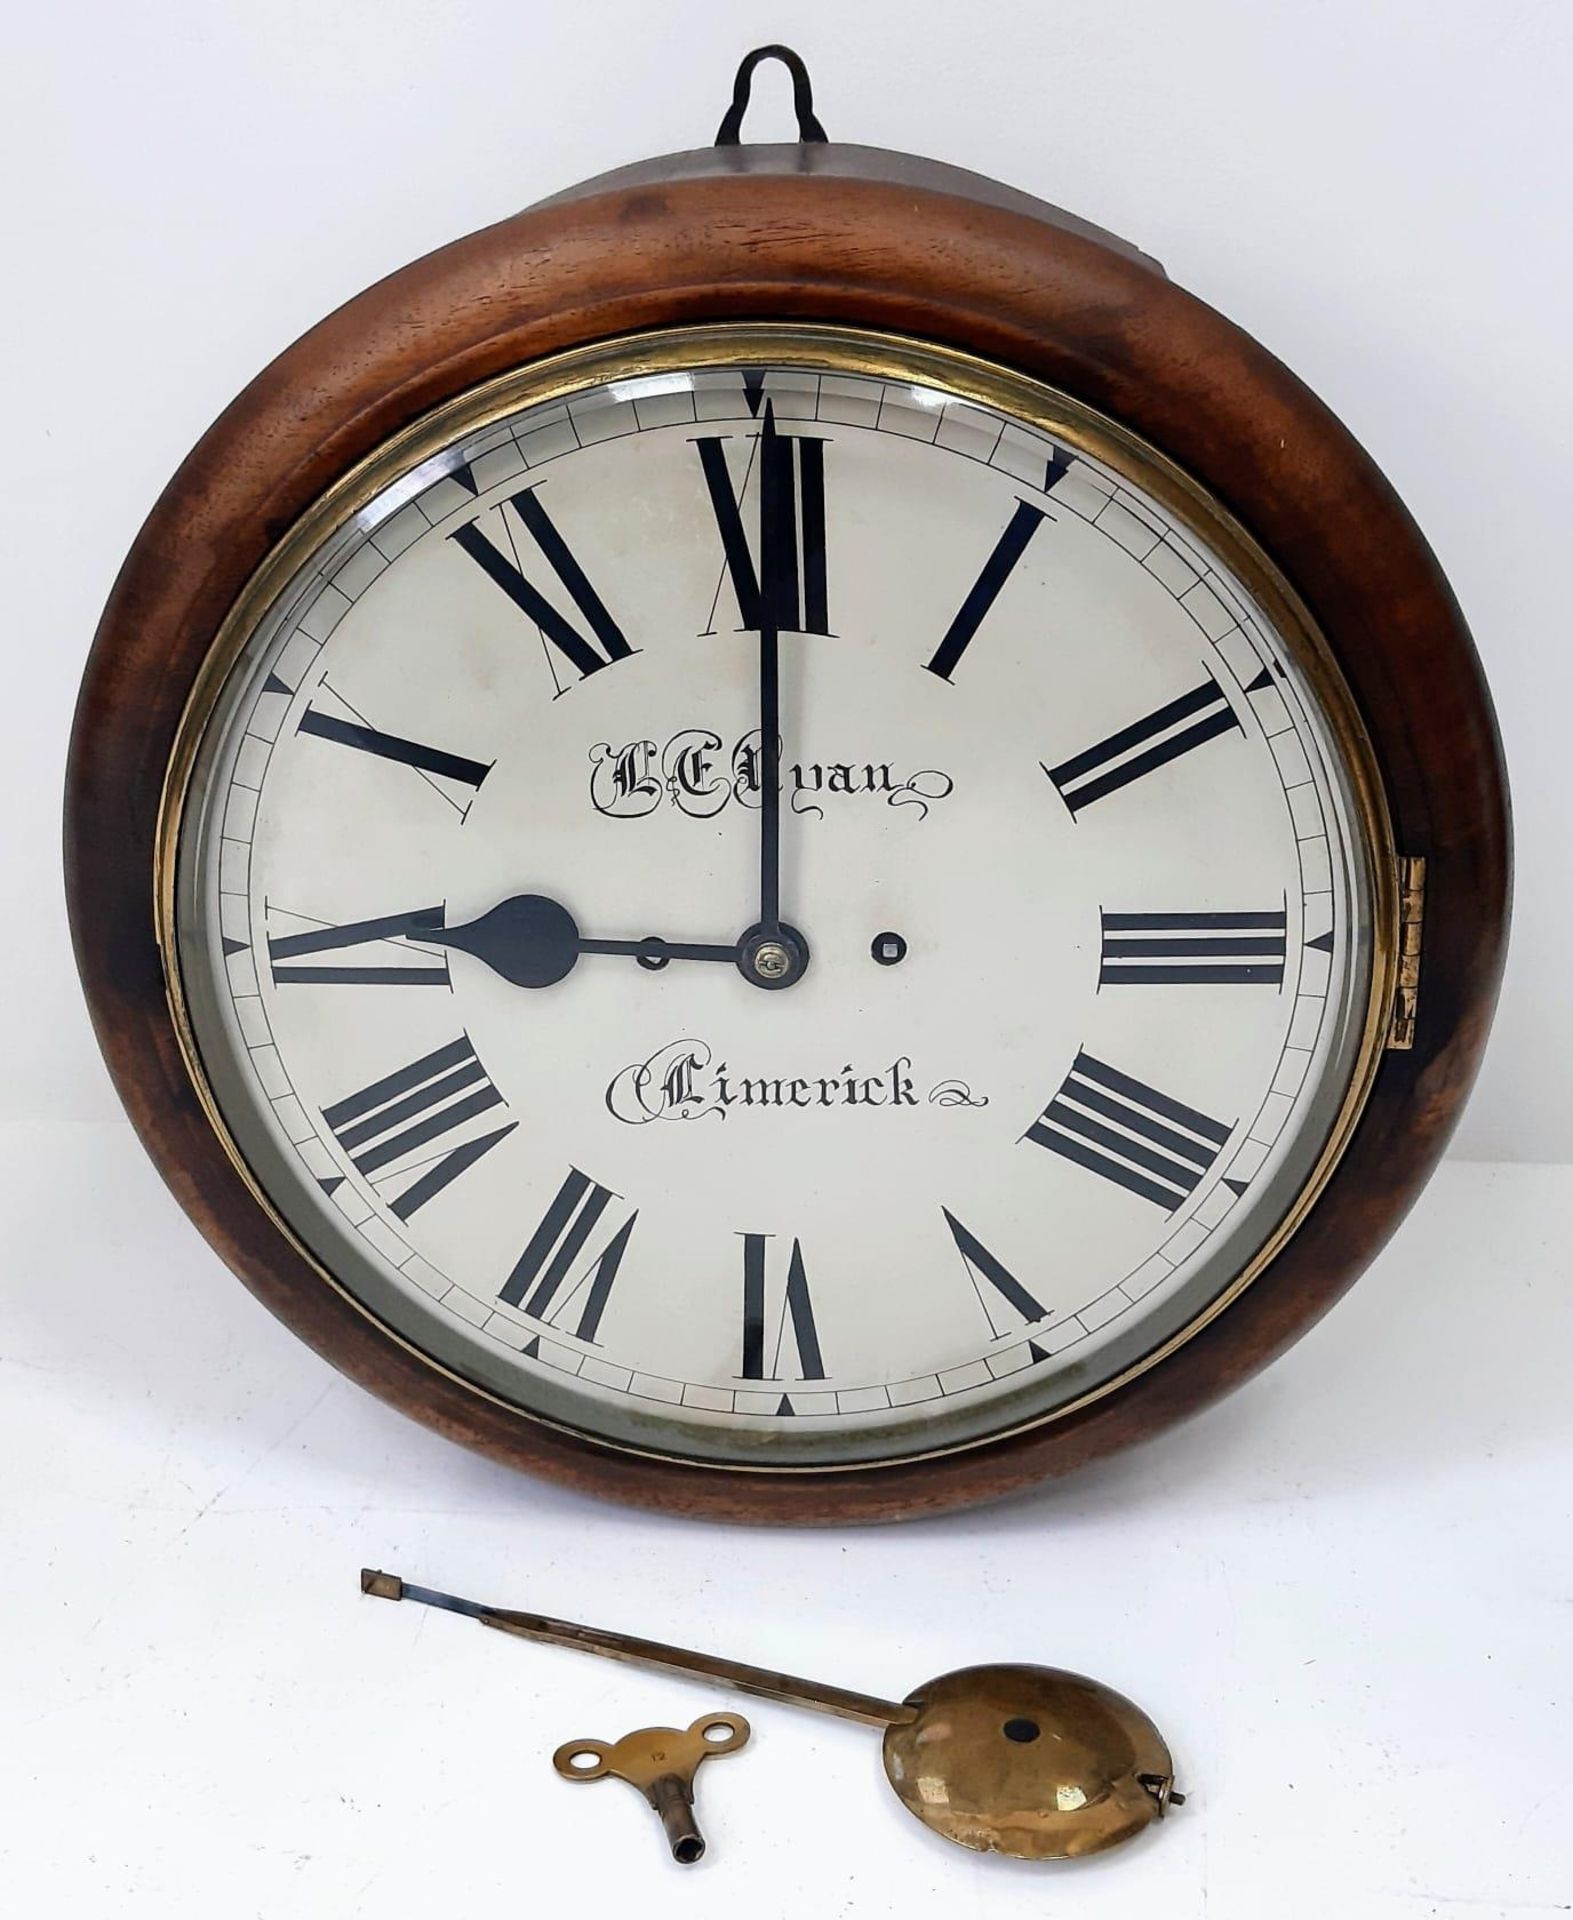 An Antique (Circa 1900) Mahogany Cased Twin Fusee Striking Dial Wall-Clock. This English made (